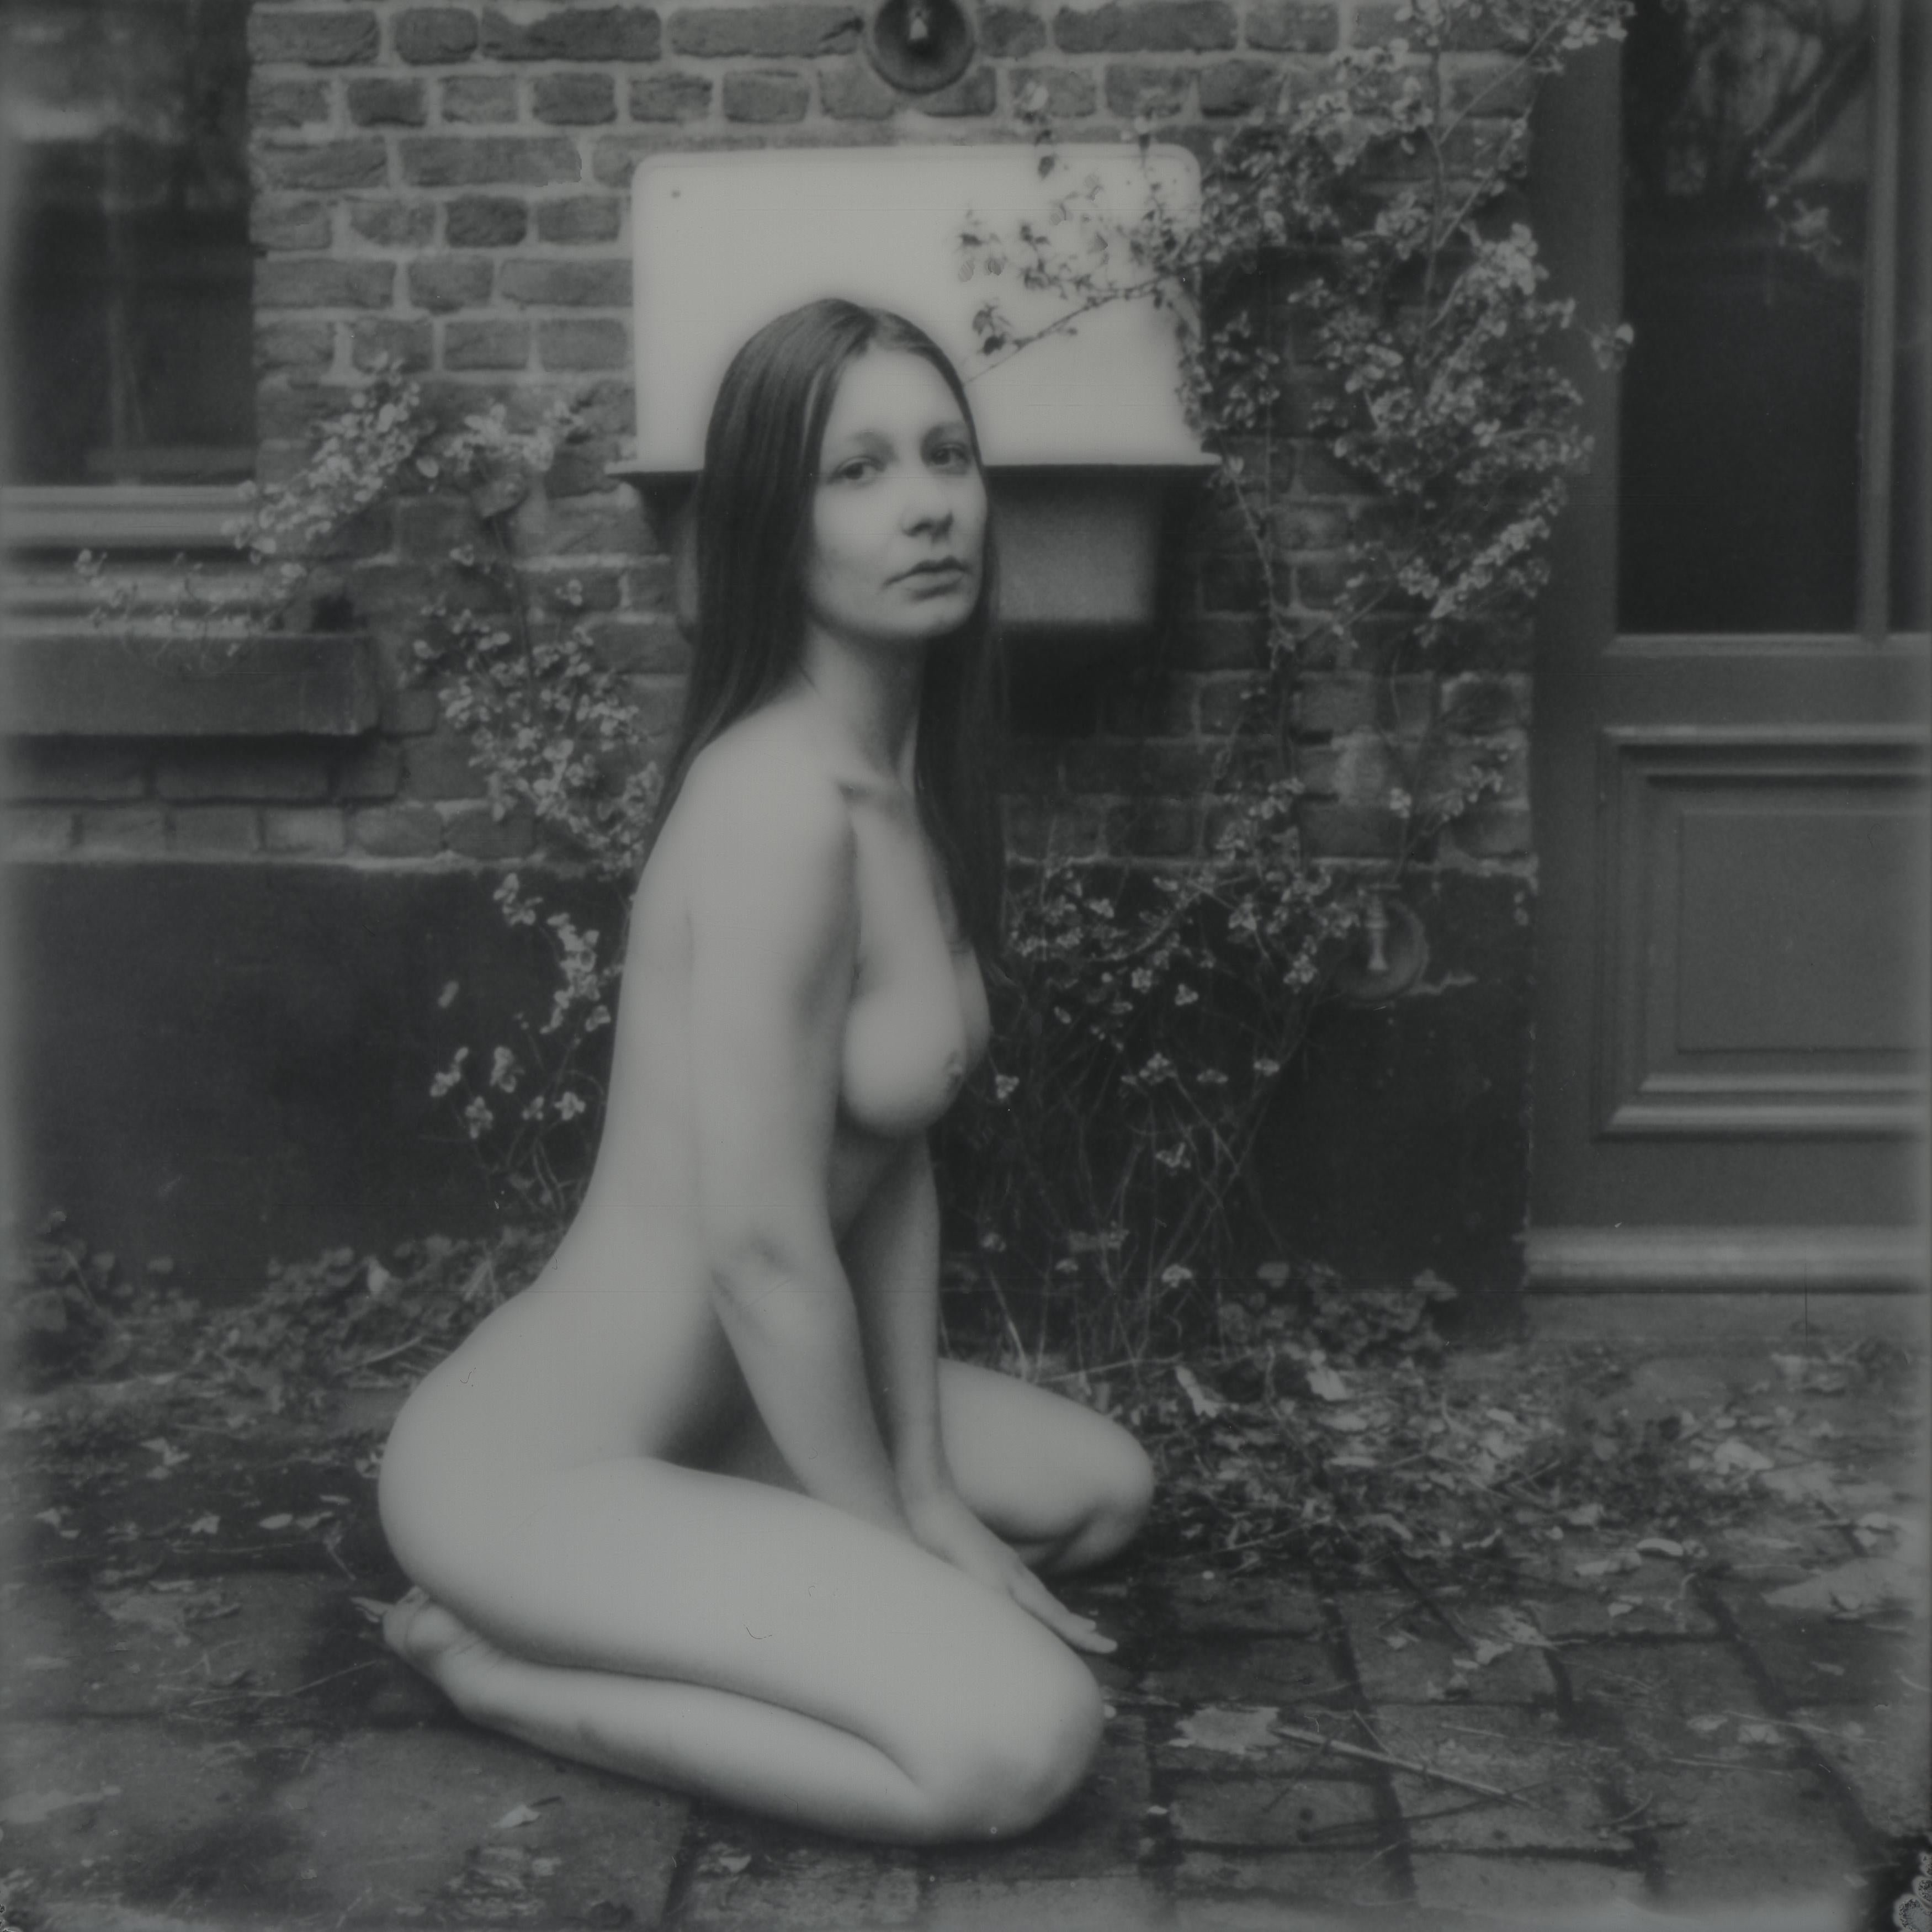 Kirsten Thys van den Audenaerde Nude Photograph - Eat you whole - Contemporary, Nude, Women, Polaroid